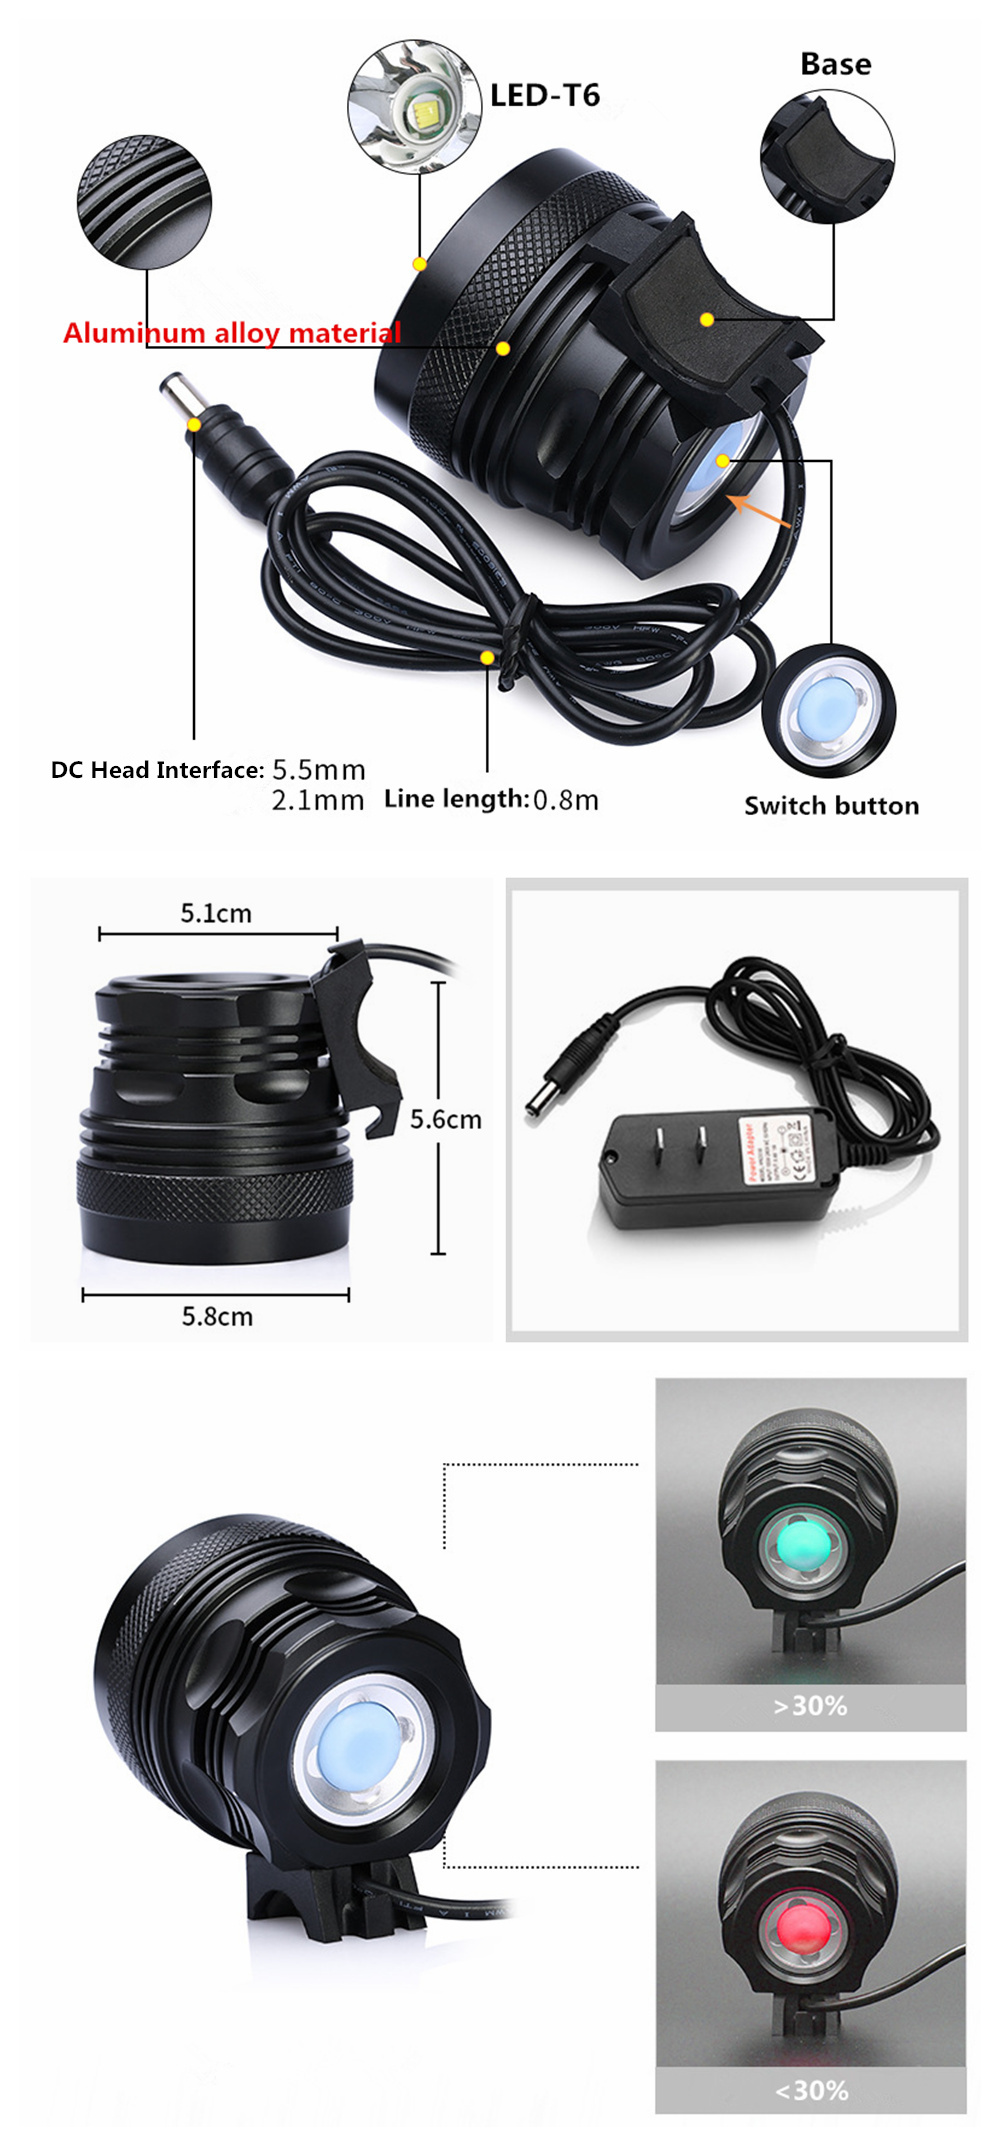 ZHISHUNJIA B80 8-LED 3-Mode Cold White Bike Light / Headlamp - 10x 18650 Battery